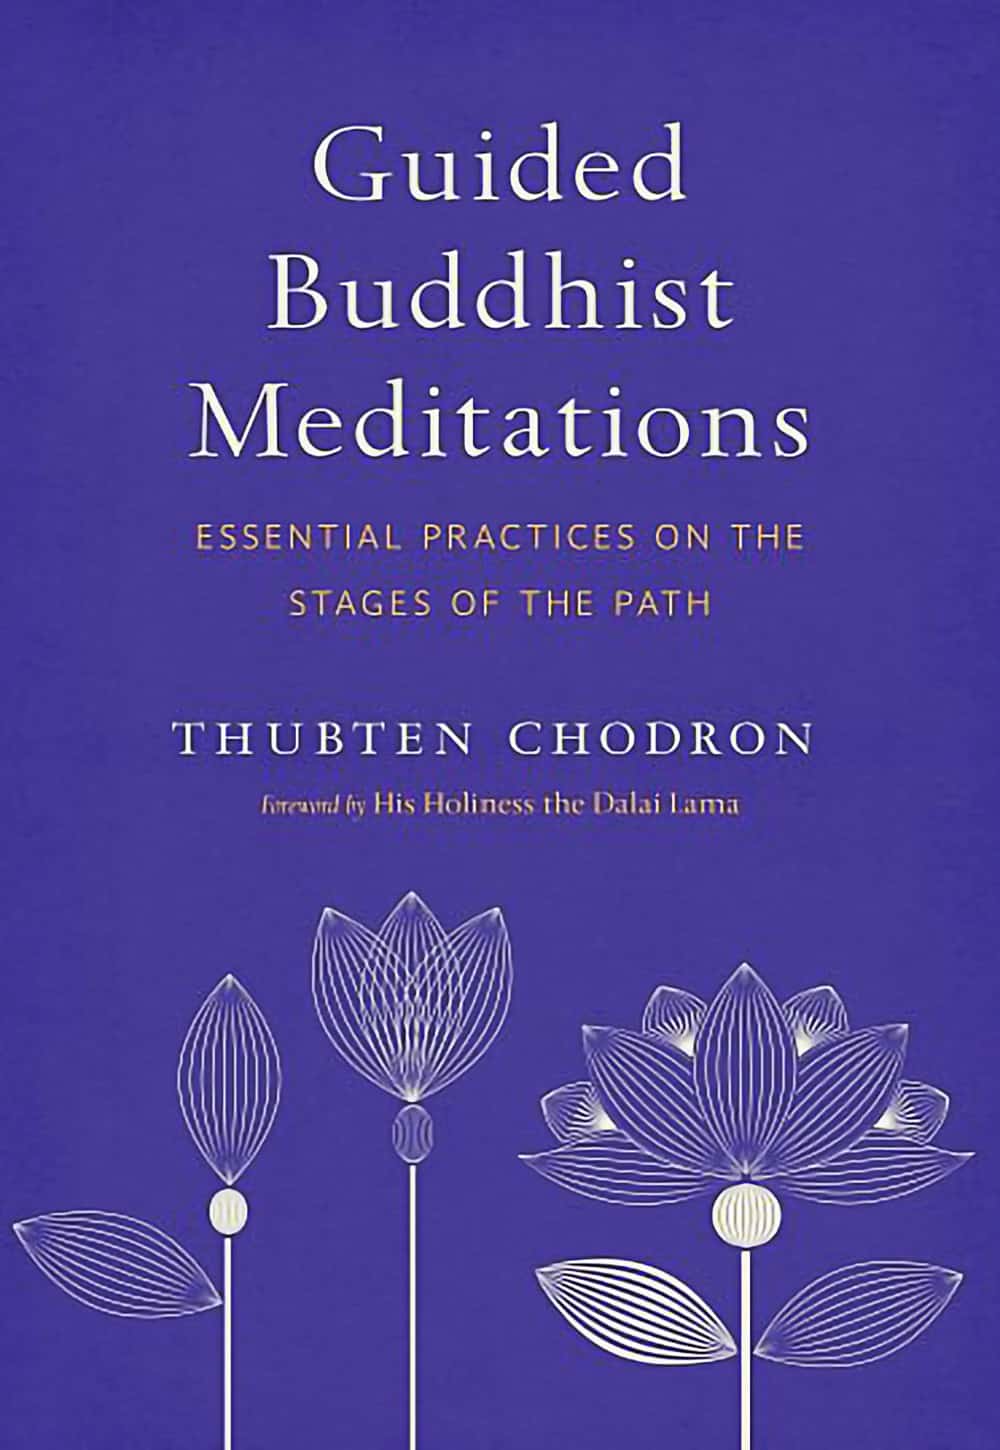 Info on Meditation Box? : r/TibetanBuddhism